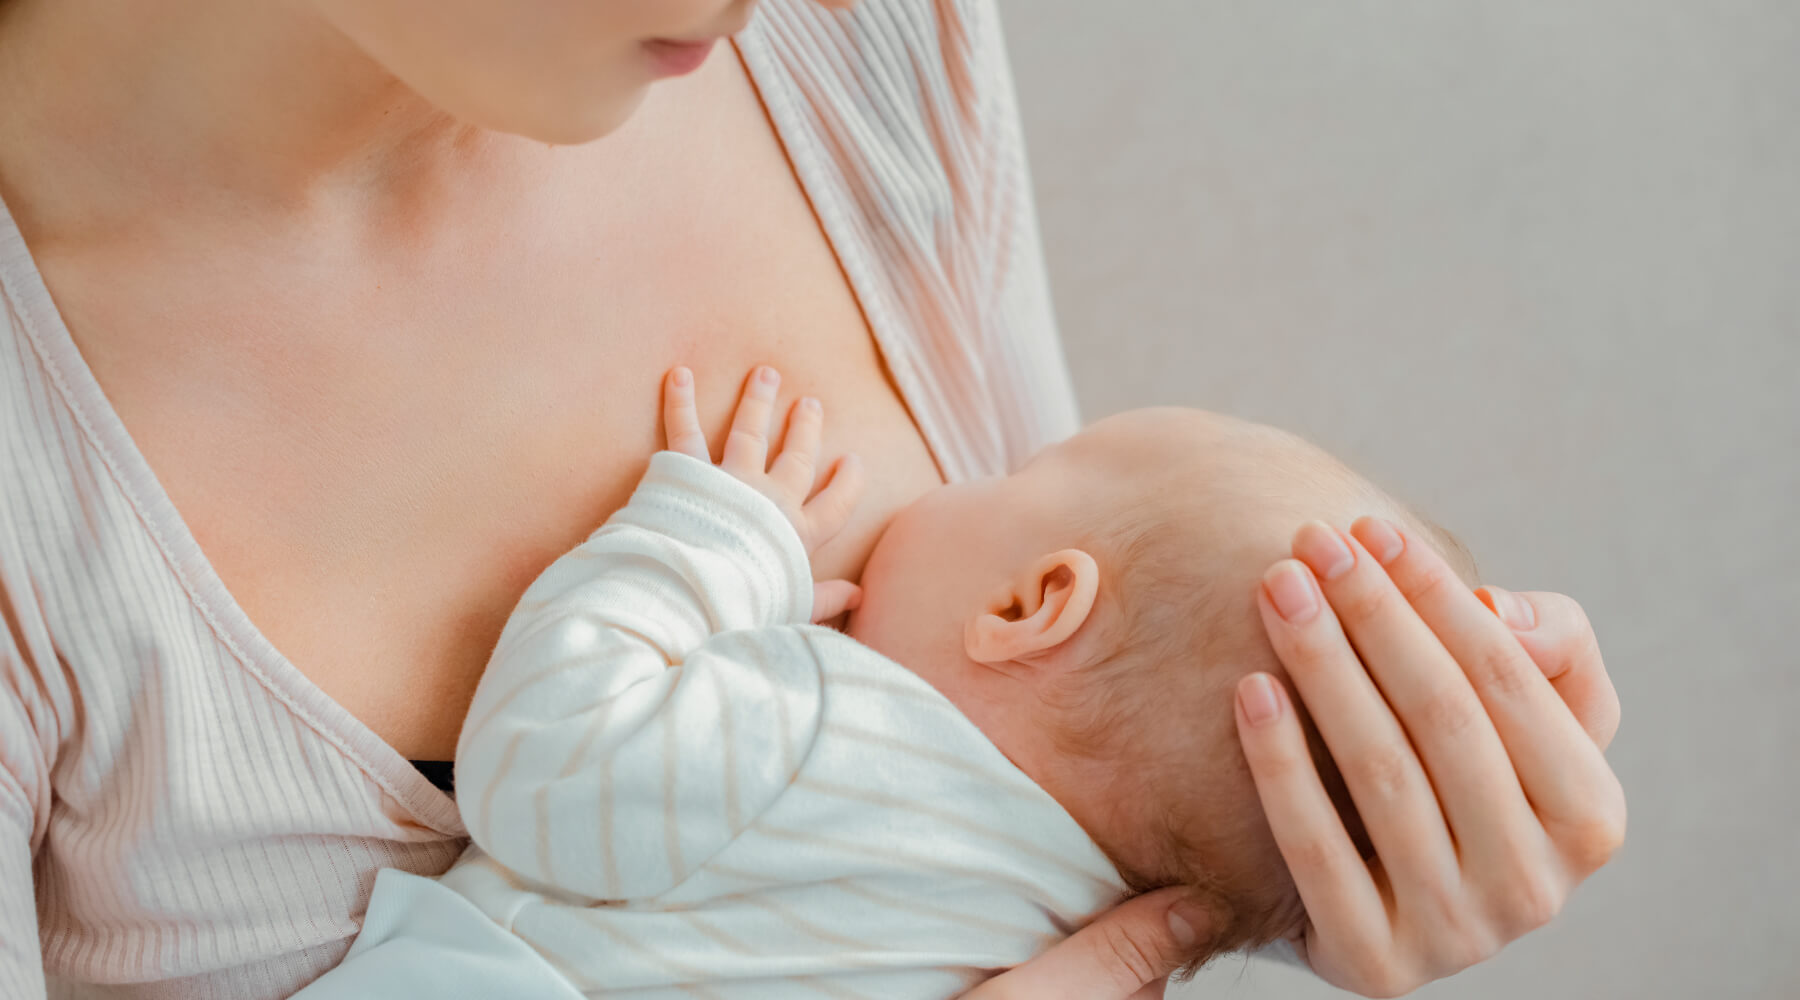 Breastfeeding nursing pads